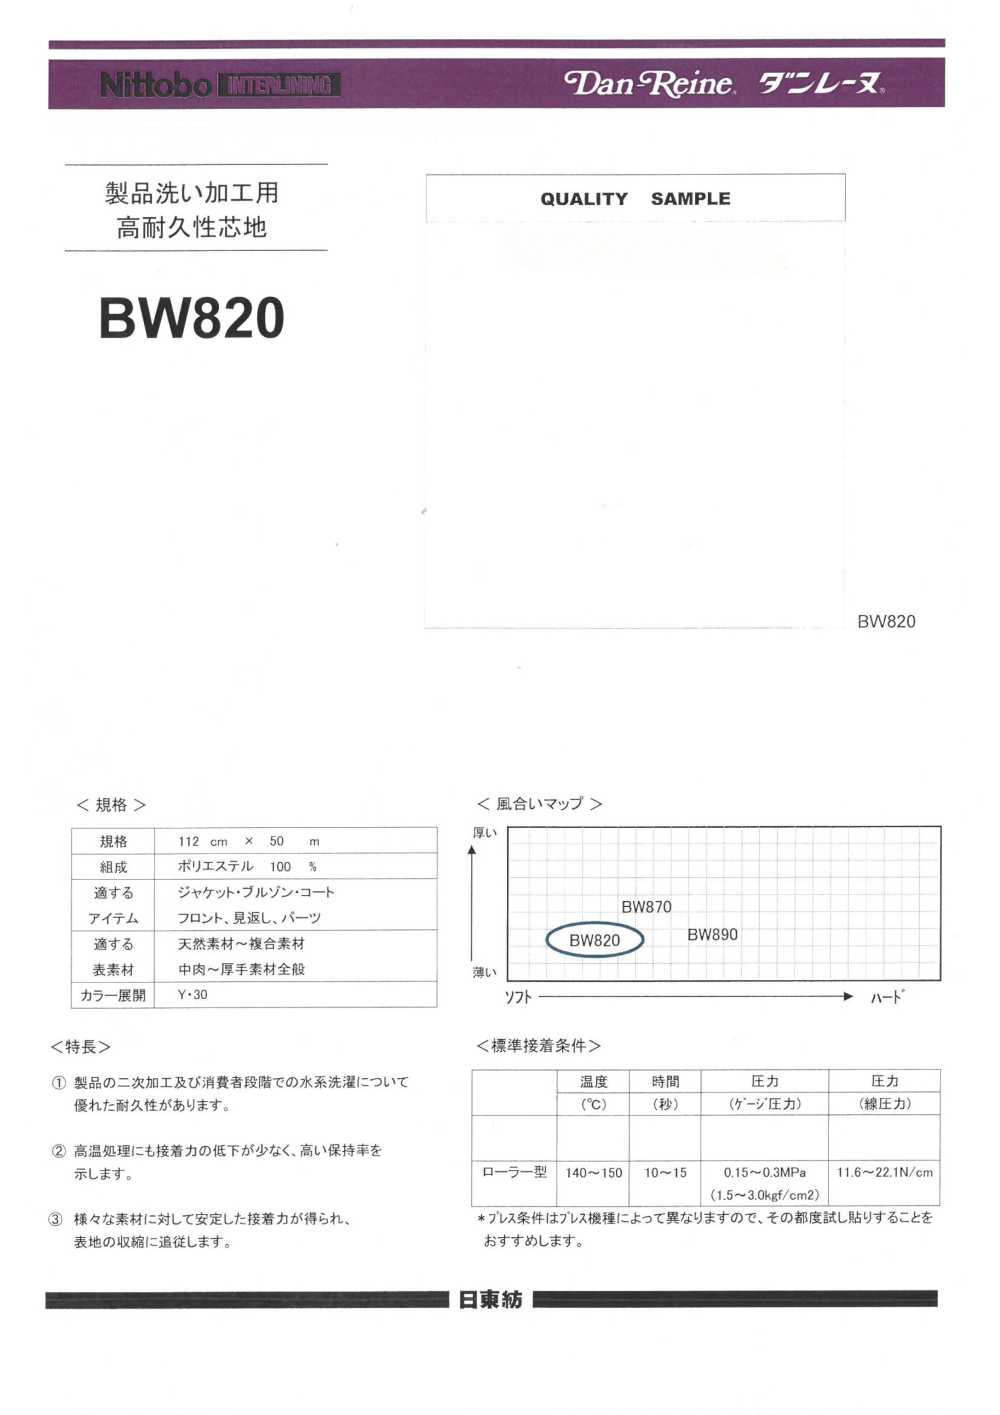 BW820 Product Washing Processing/water-based Washing Durable Interlining (30D) Nittobo